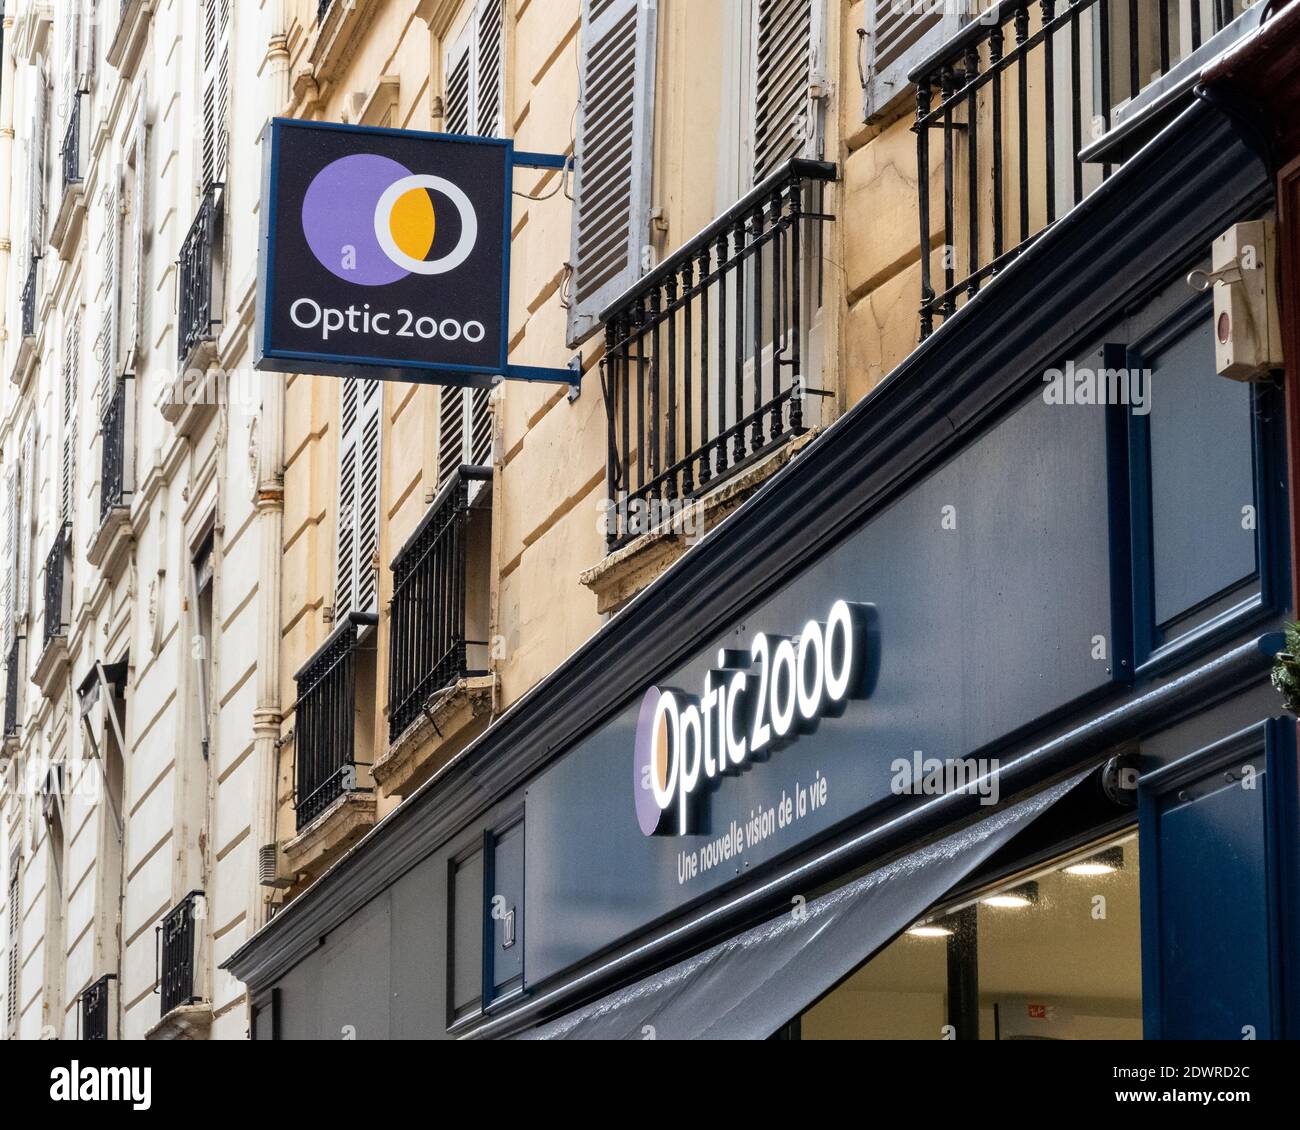 Optic 2000 shop in Bayonne, France Stock Photo